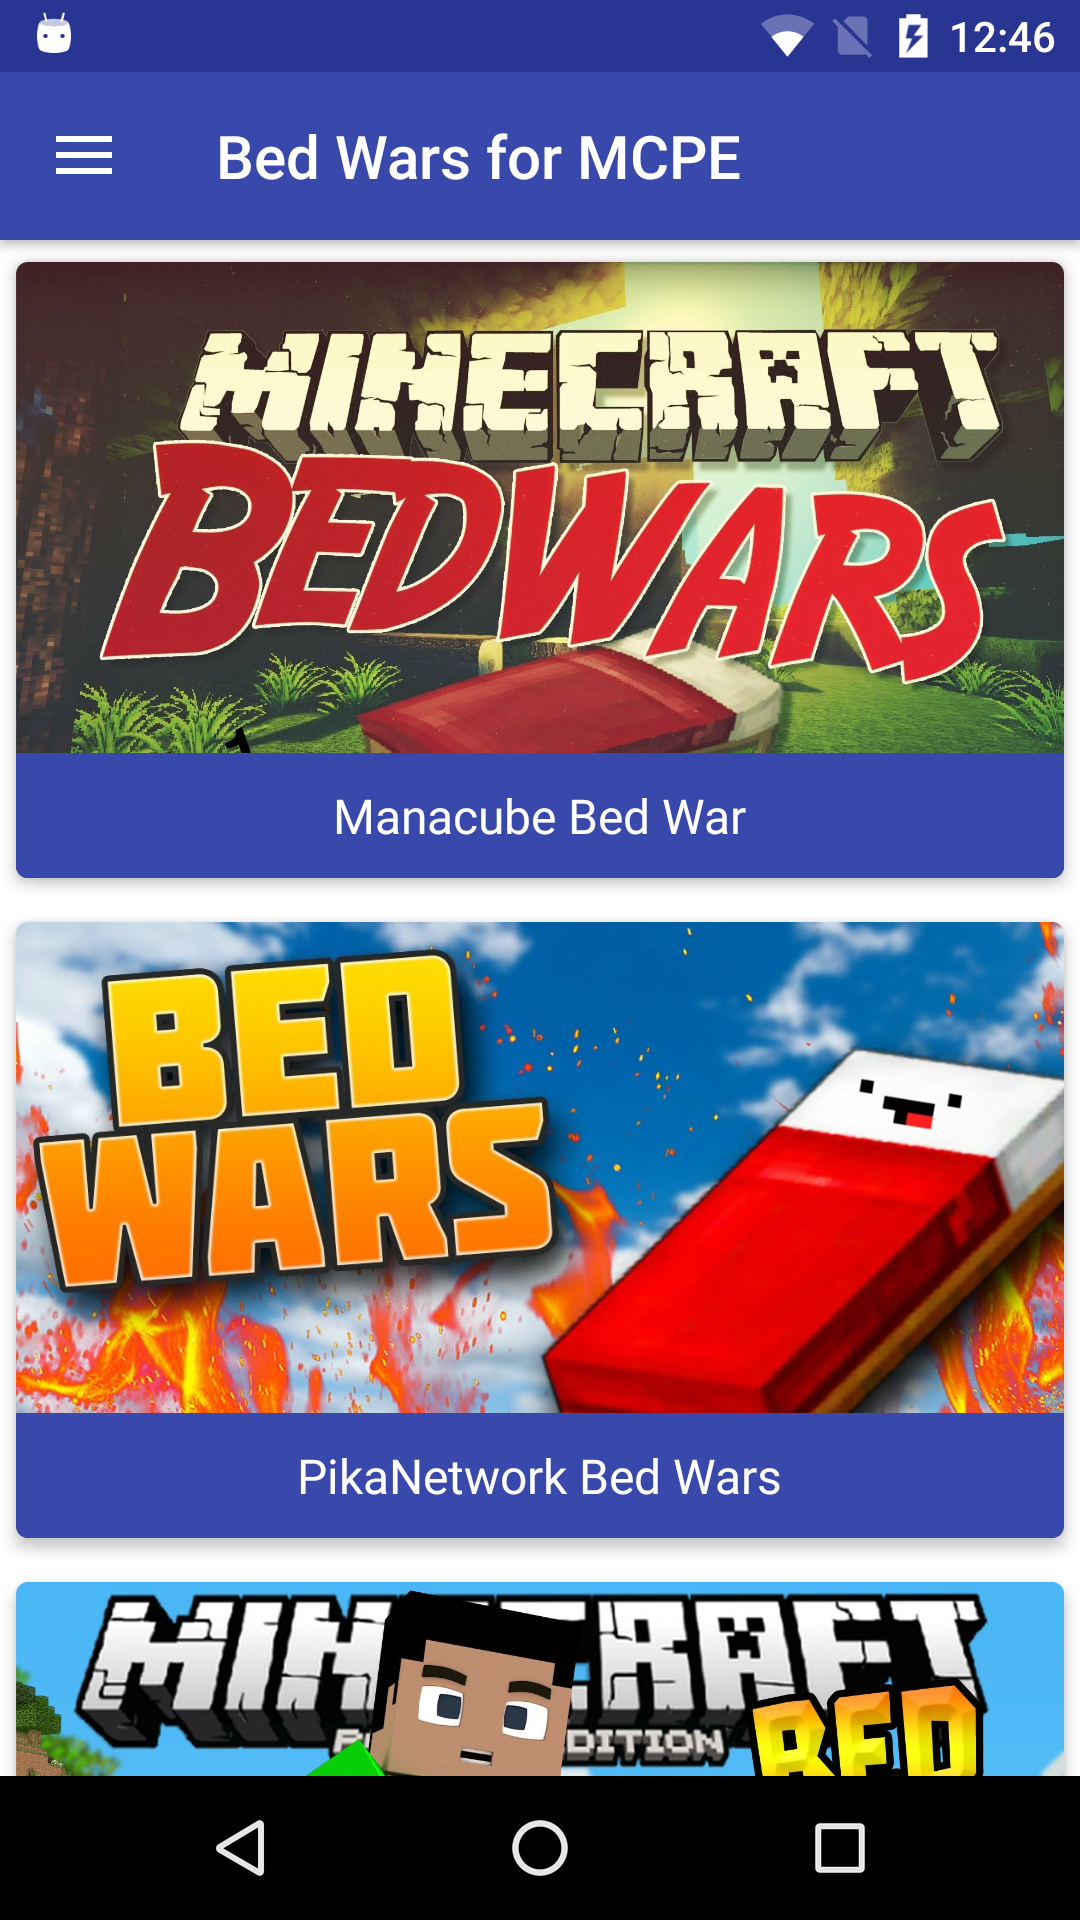 Bed wars online server for MCPE Apk Download for Android- Latest version  1.1- net.megacrafting.bedwars